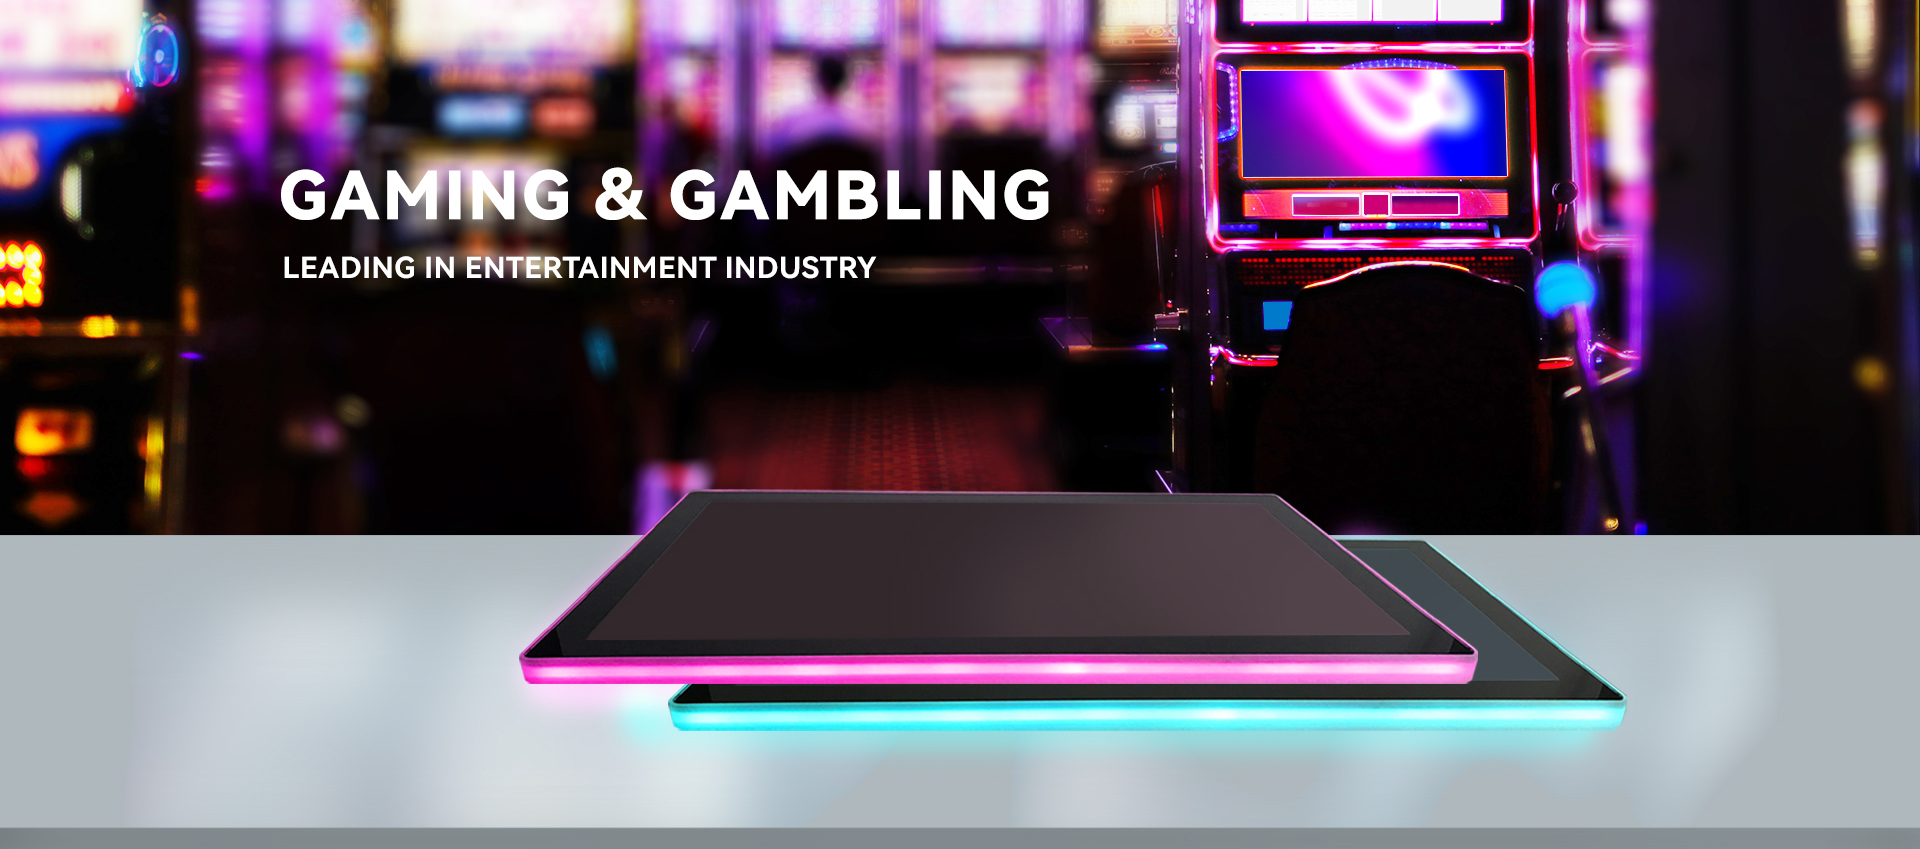 oplossing-Gaming-&-Gambling_02